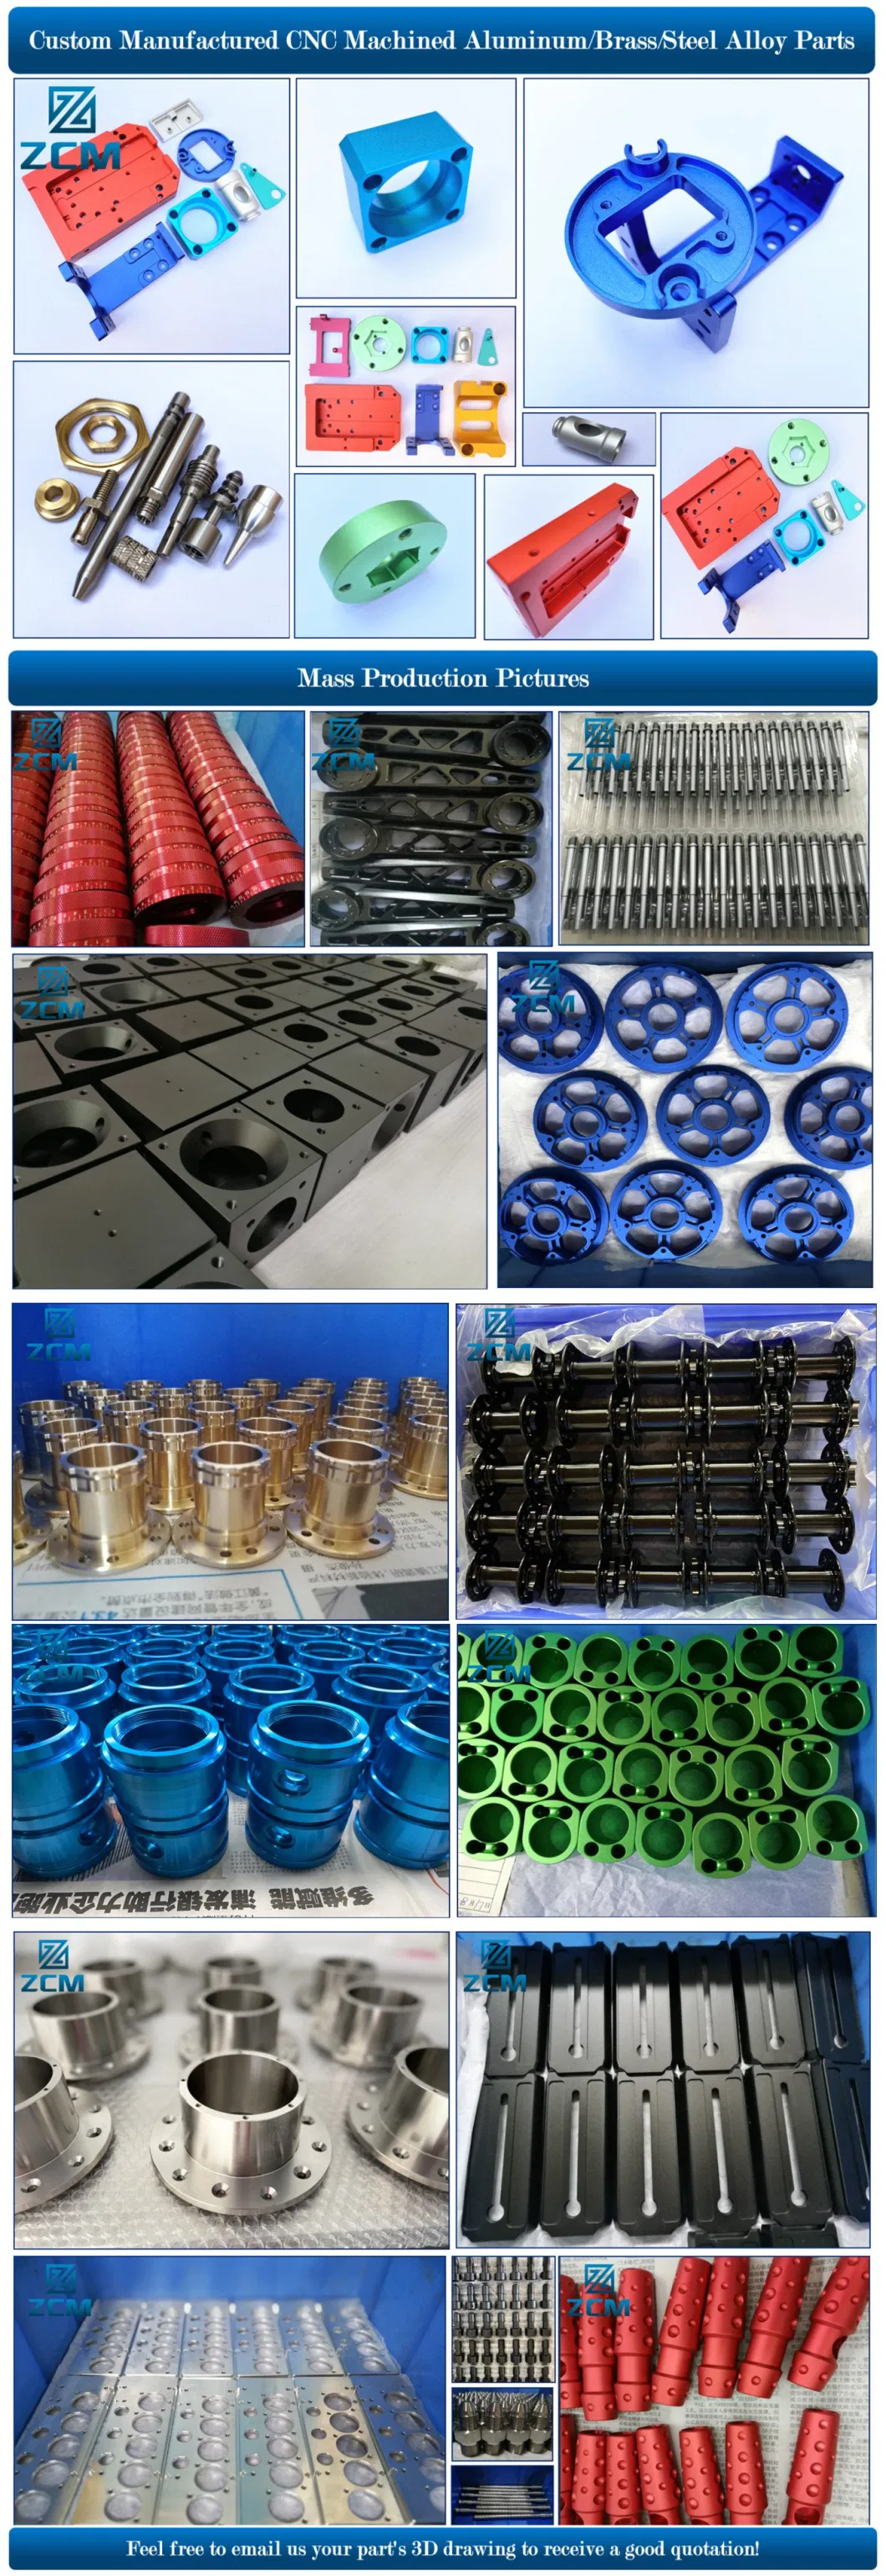 Shenzhen Custom Manufactured Small Order CNC Milled Titanium Stainless Steel Golf Putter Head